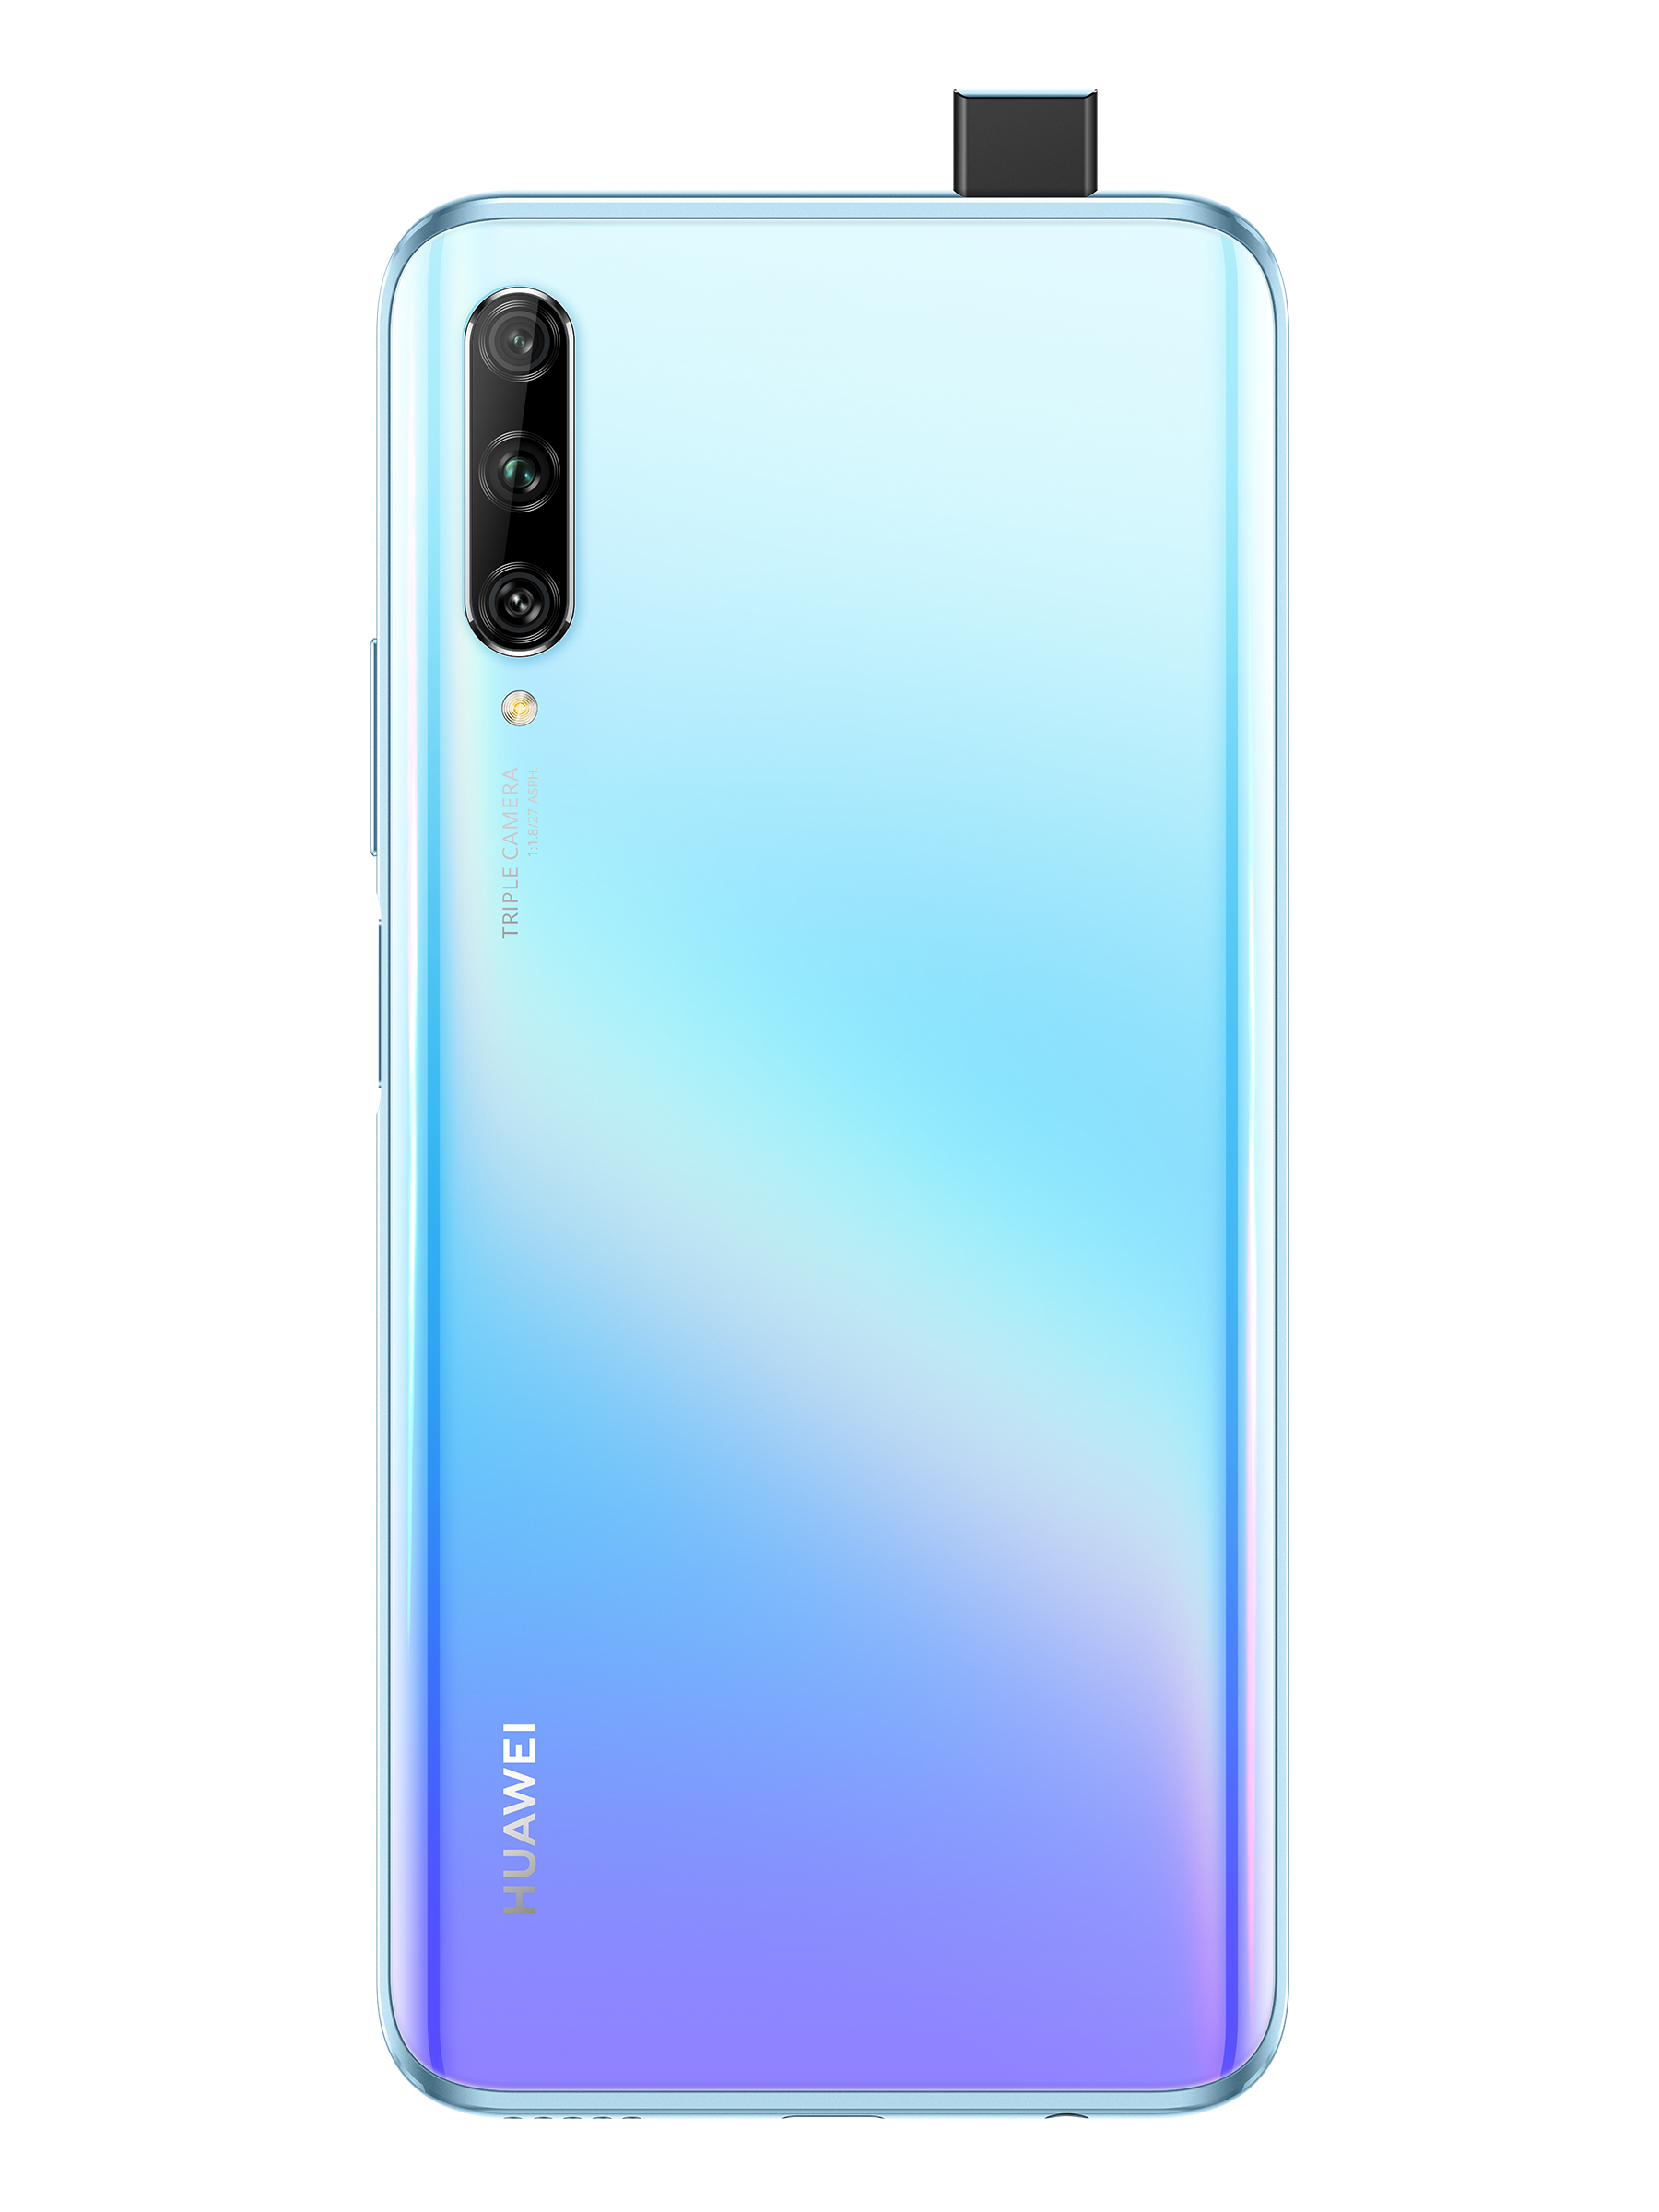 Обзор смартфона Huawei P smart 2020